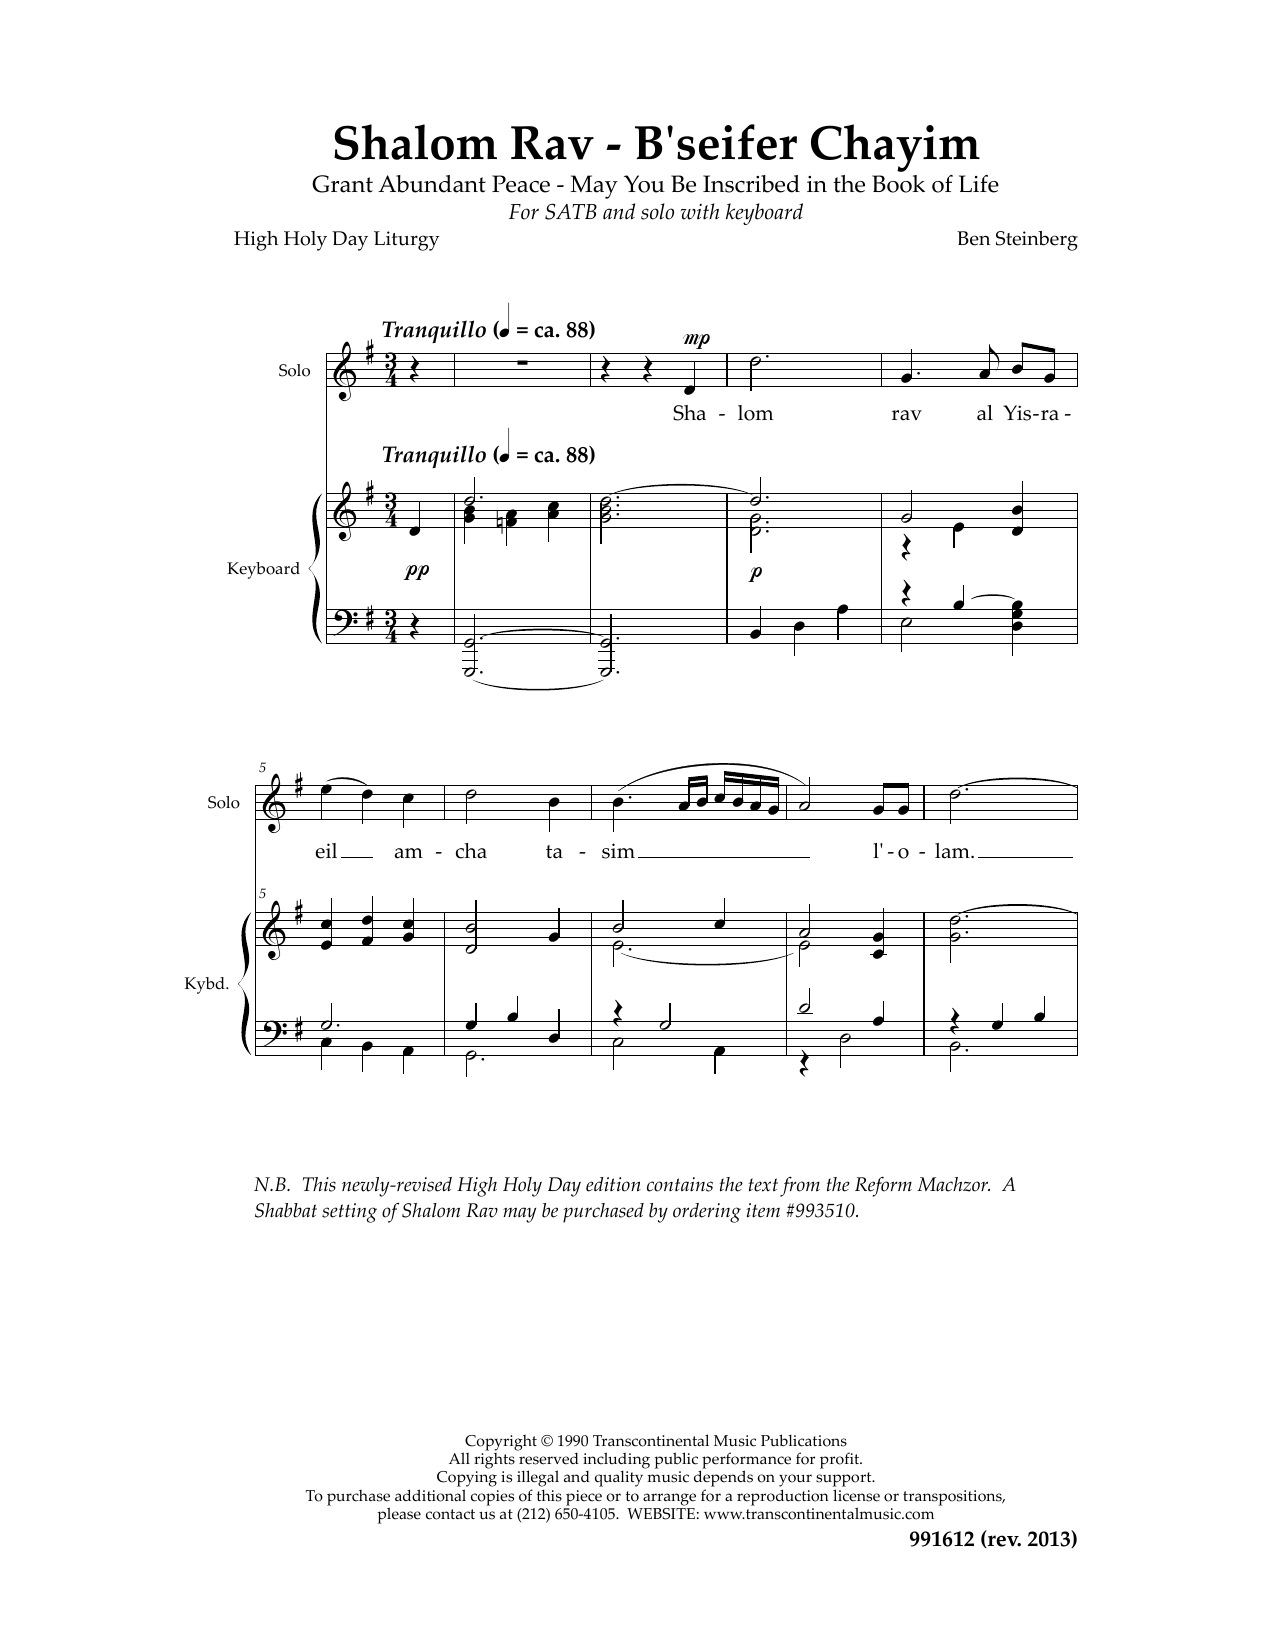 Ben Steinberg Shalom Rav Sheet Music Notes & Chords for SATB - Download or Print PDF